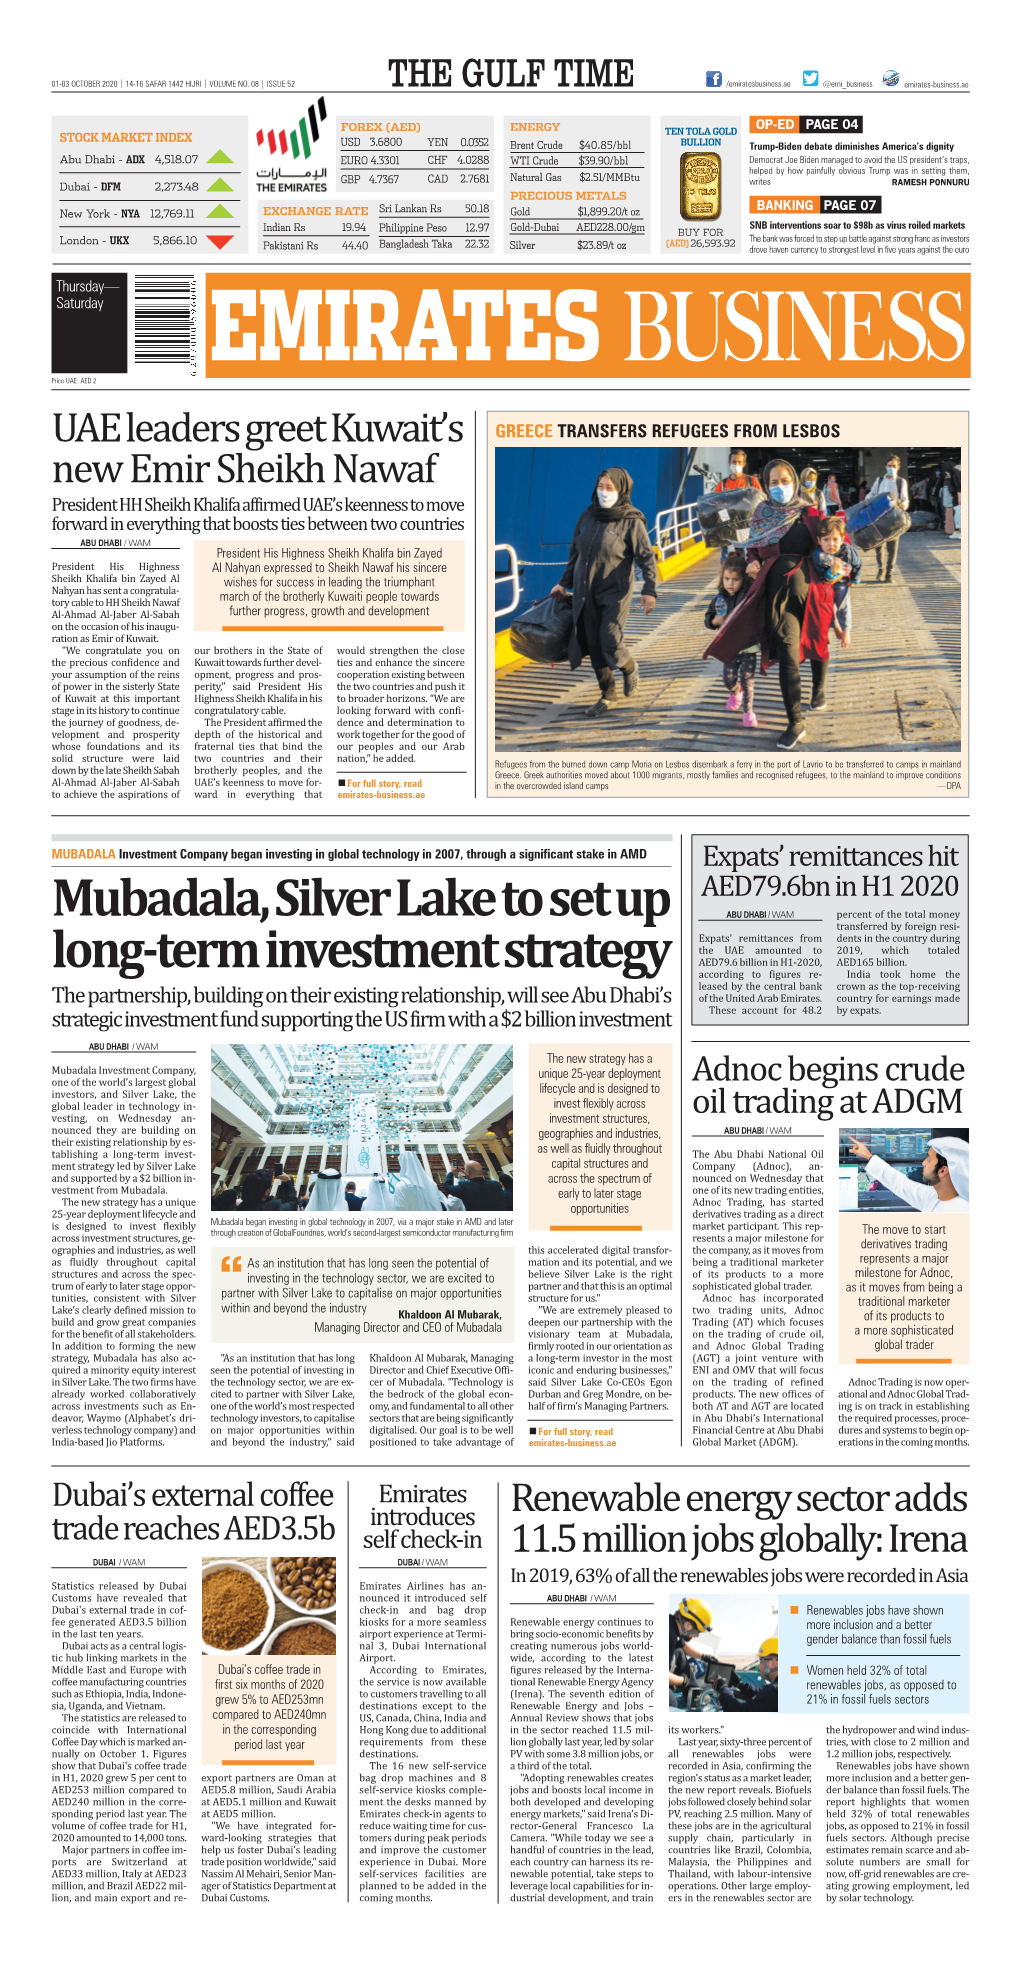 Mubadala, Silver Lake to Set up Long-Term Investment Strategy